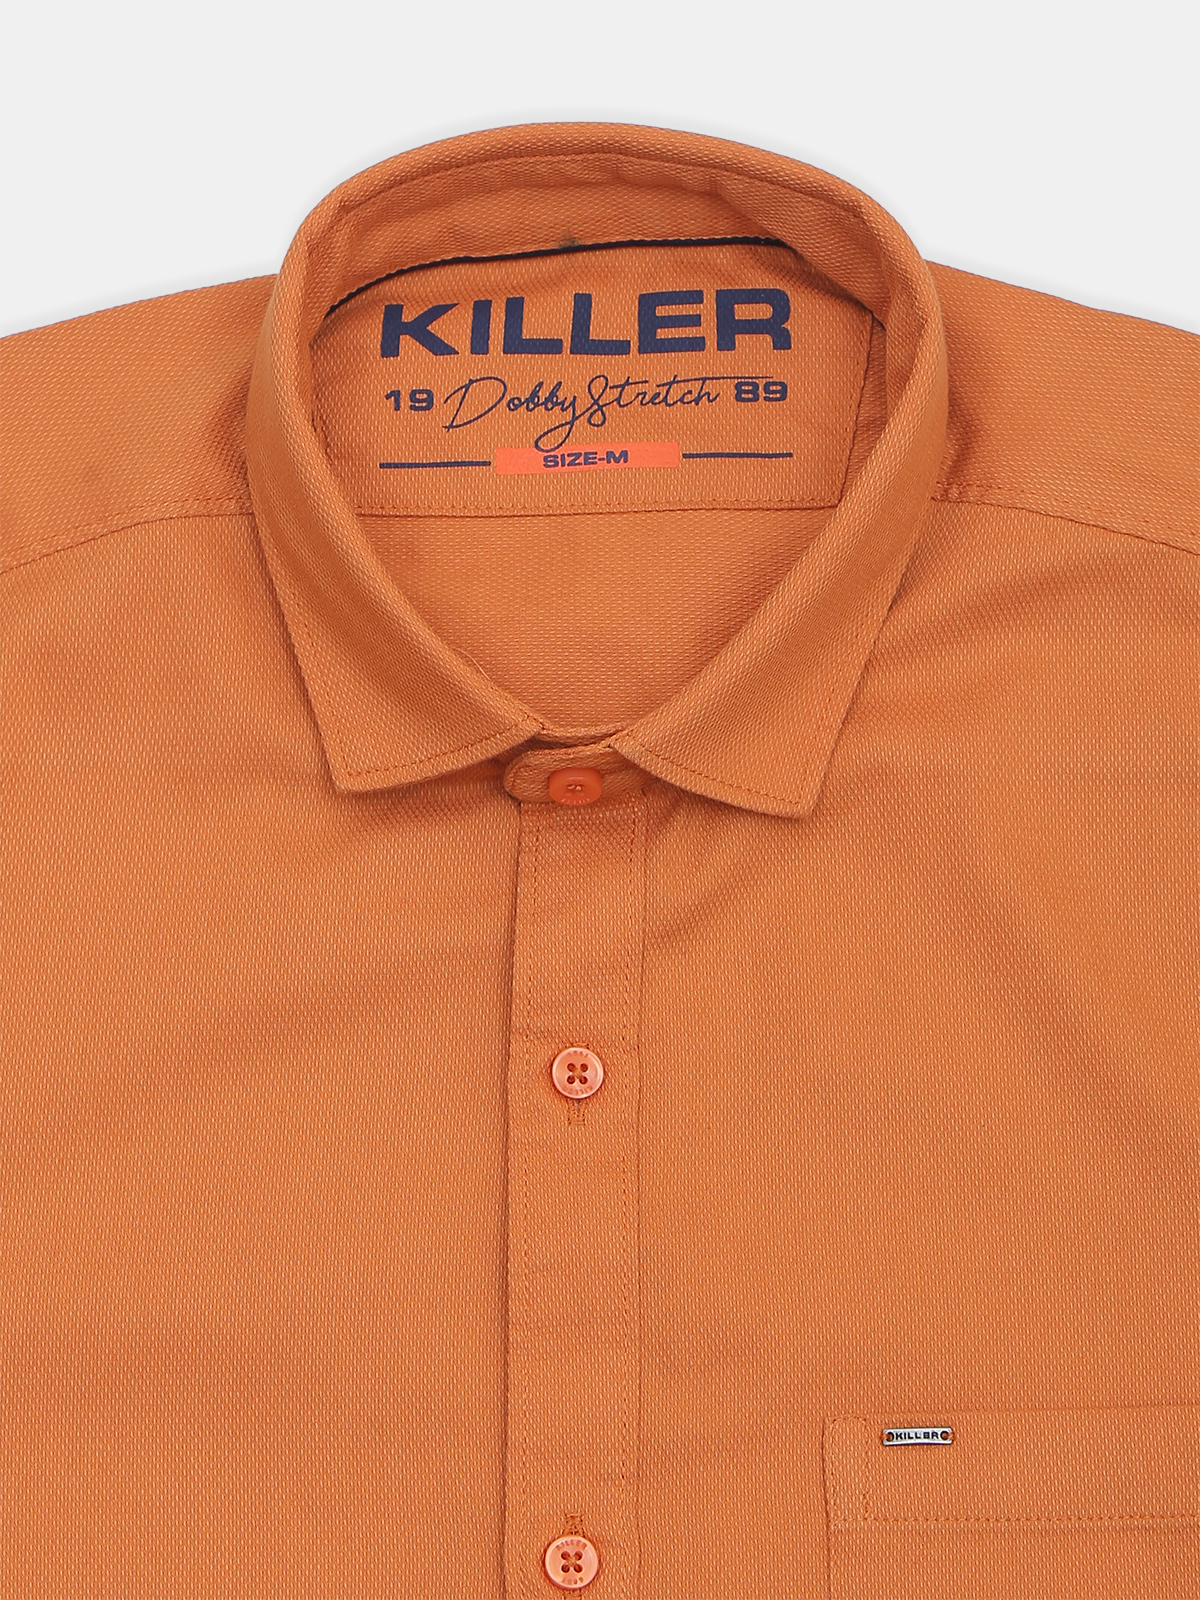 Killer solid rust orange cotton casual wear slim fit shirt - G3-MCS9334